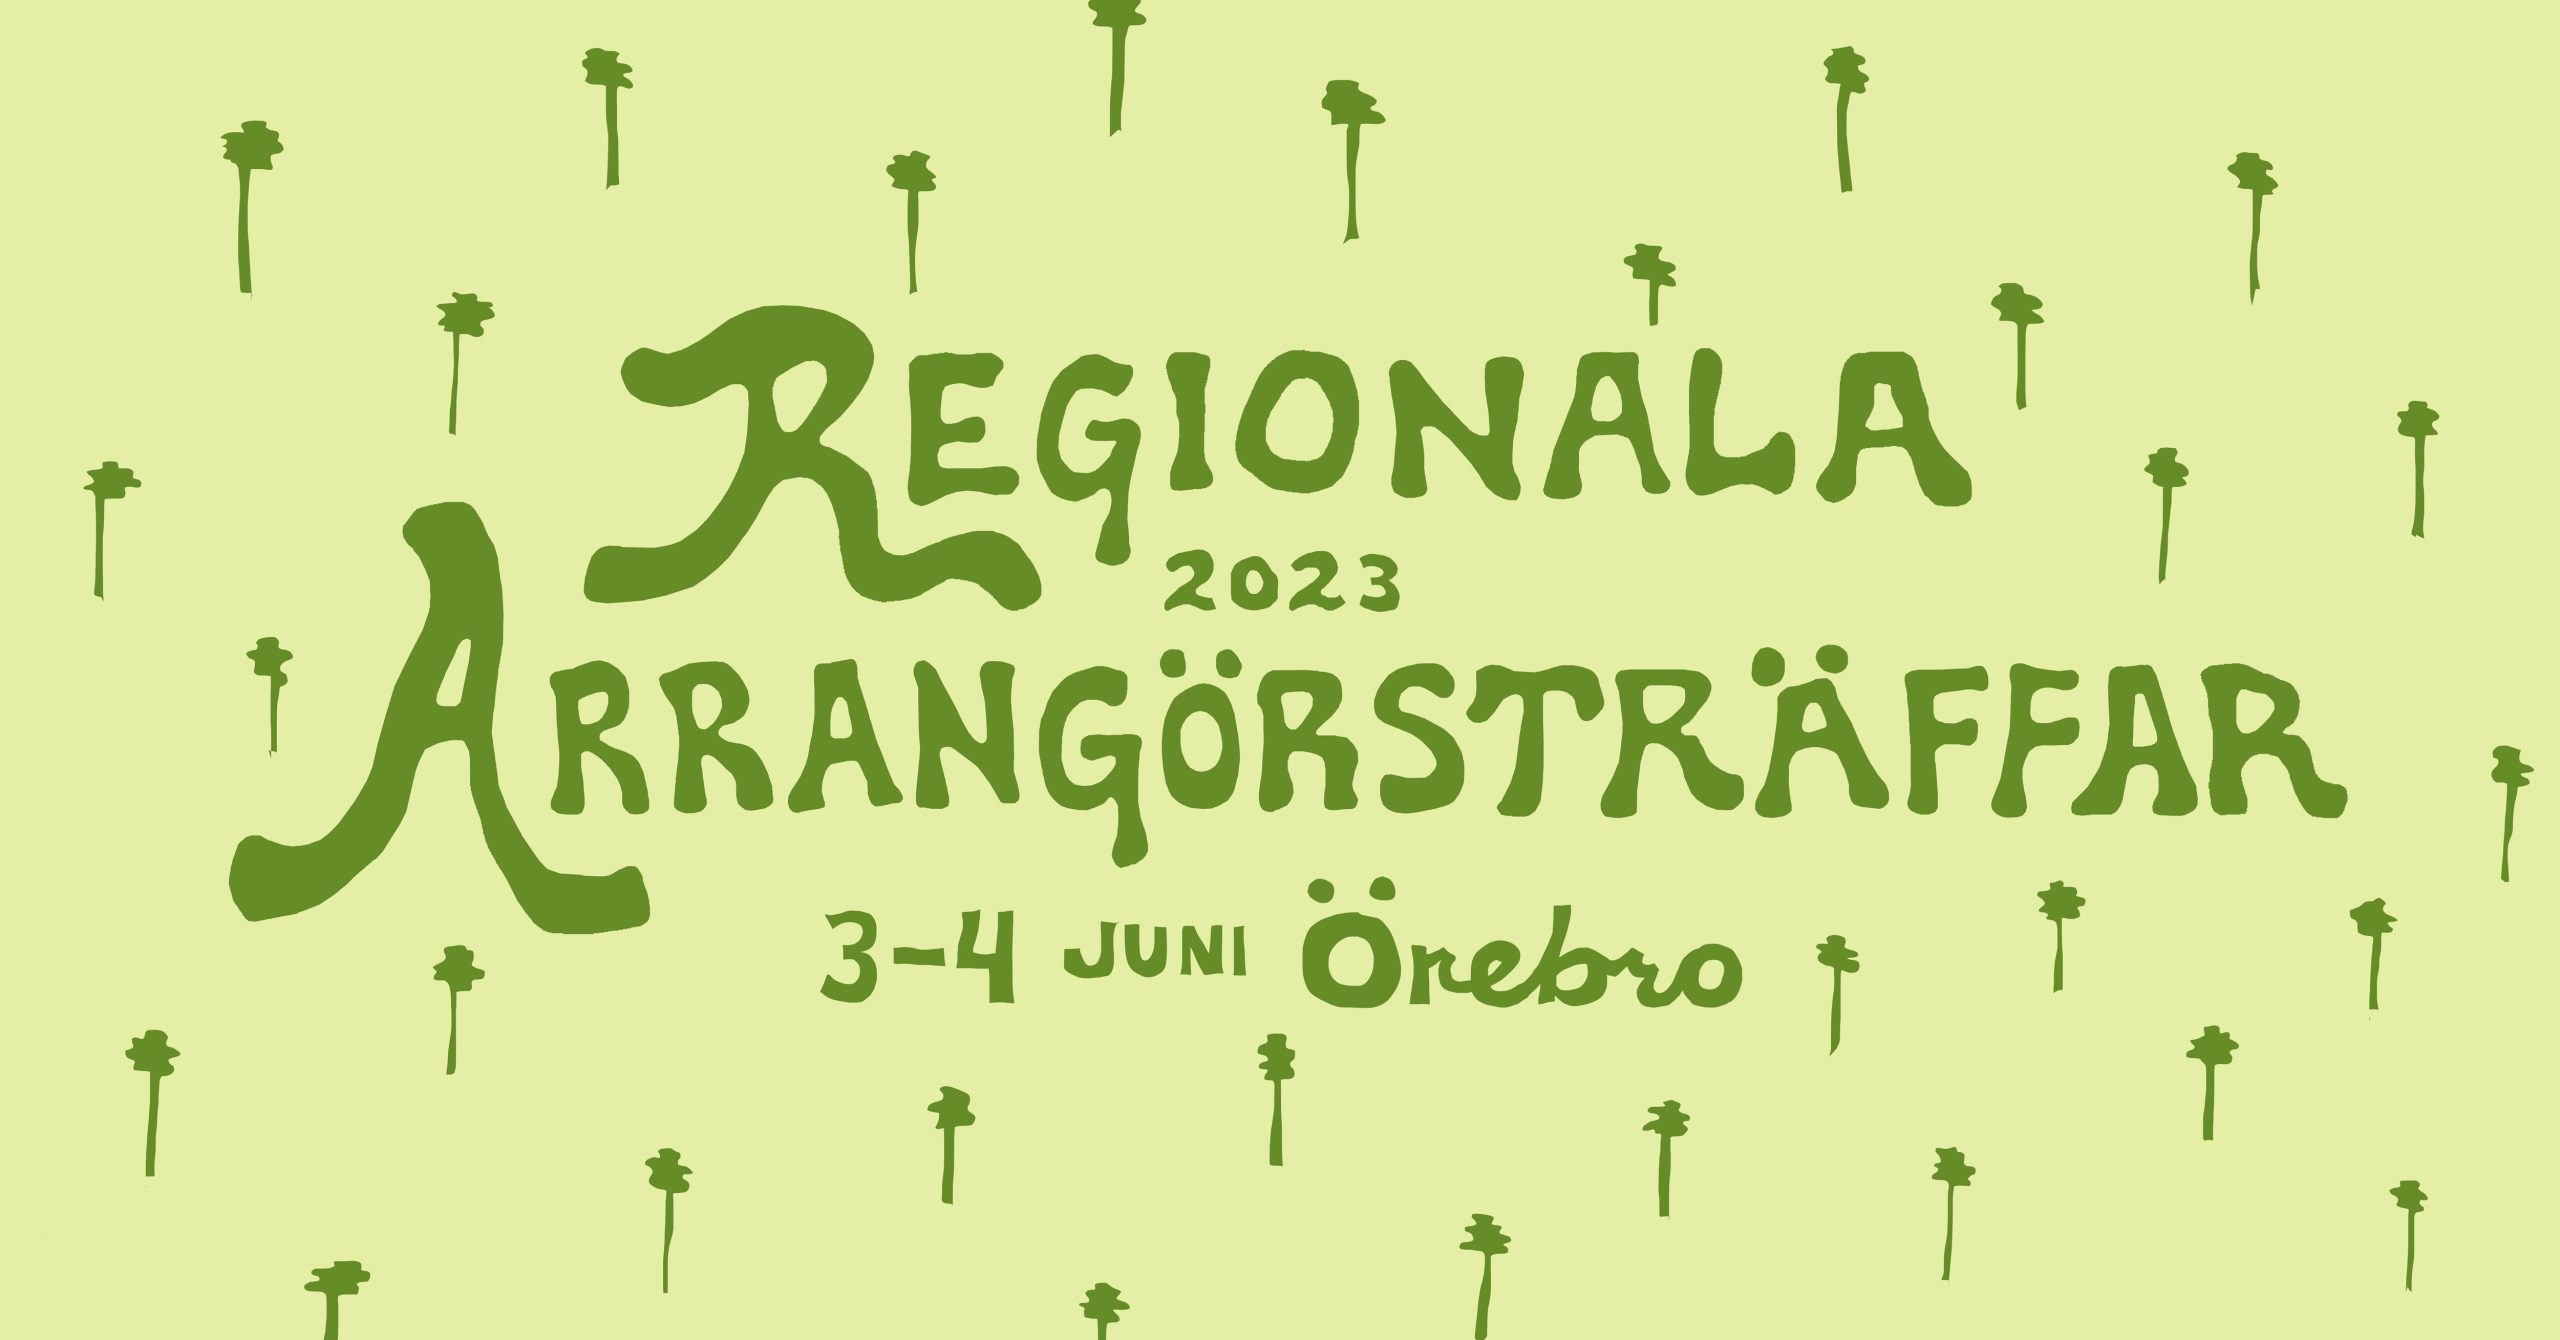 Arrangörsträff i Örebro 3-4 juni